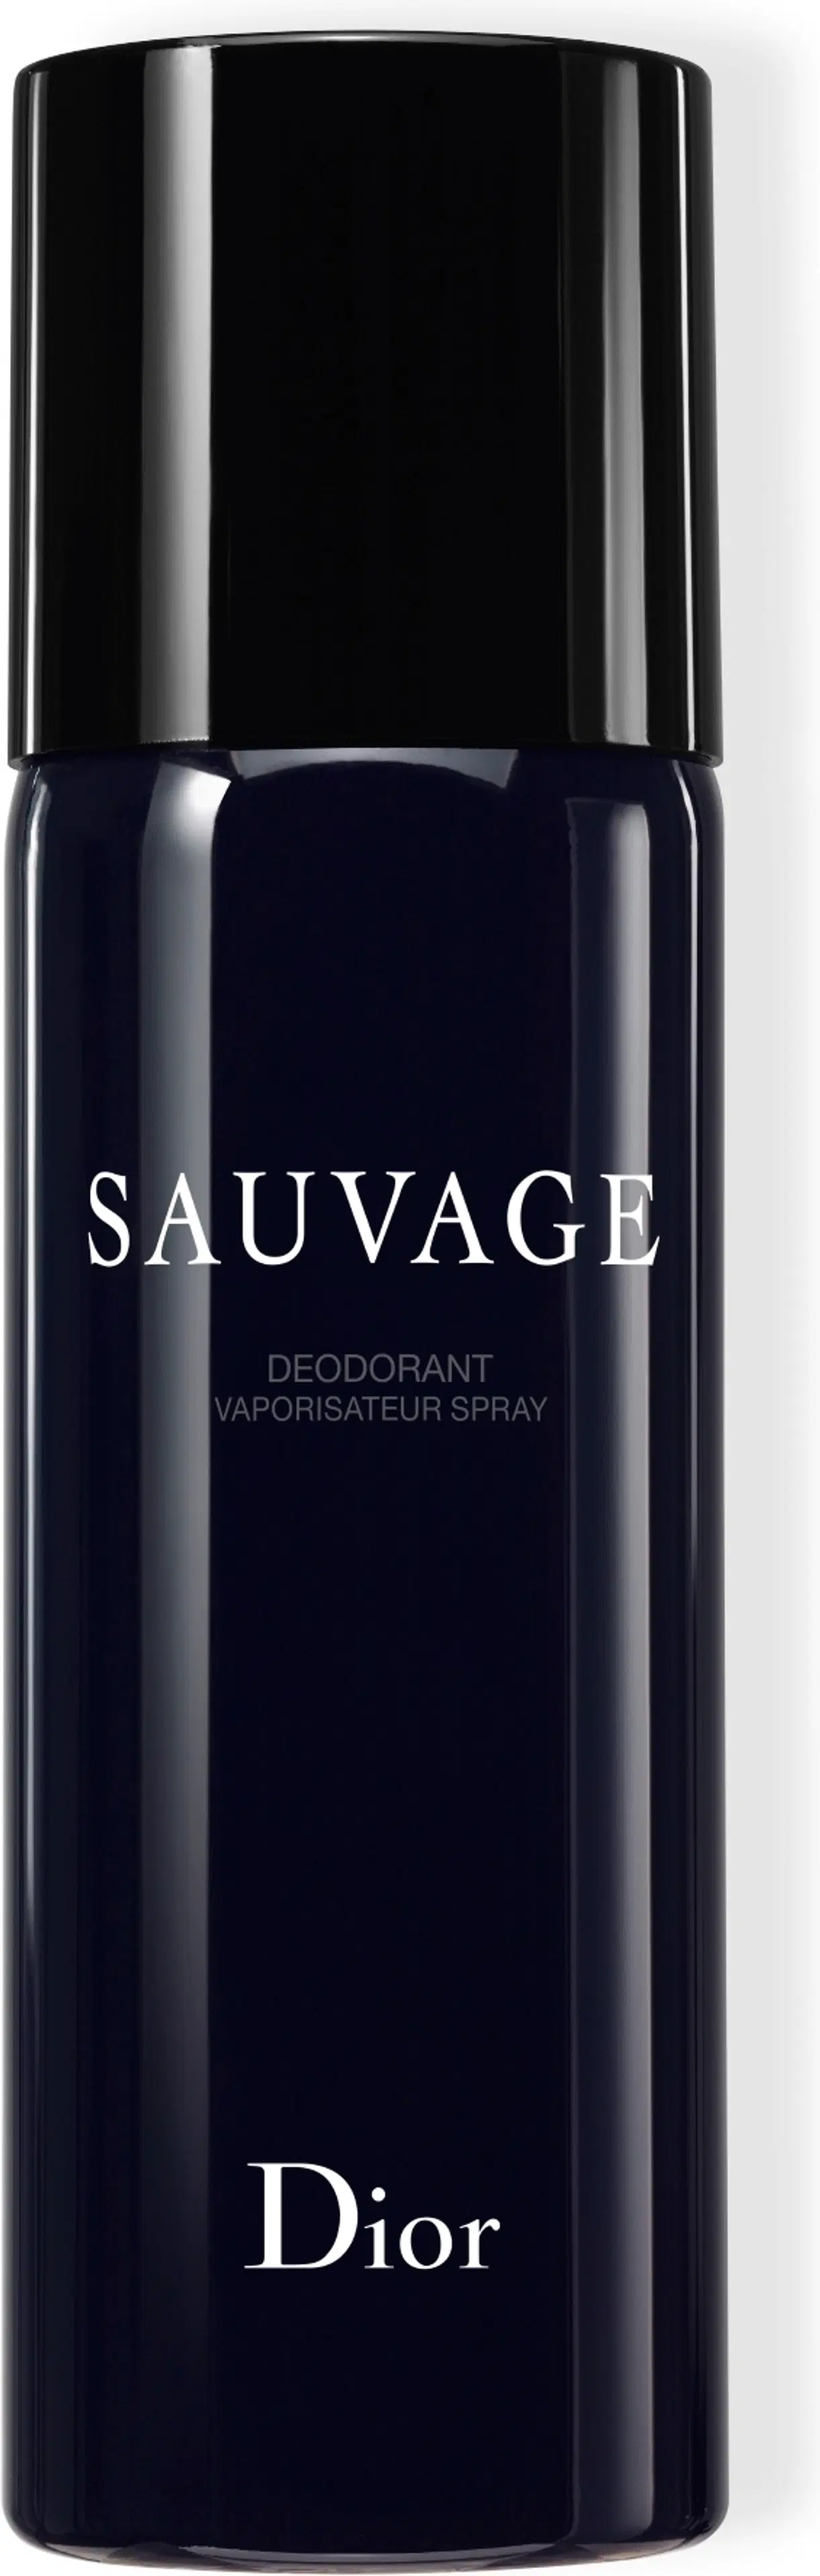 DIOR Sauvage Deodorant Spray 150 ml